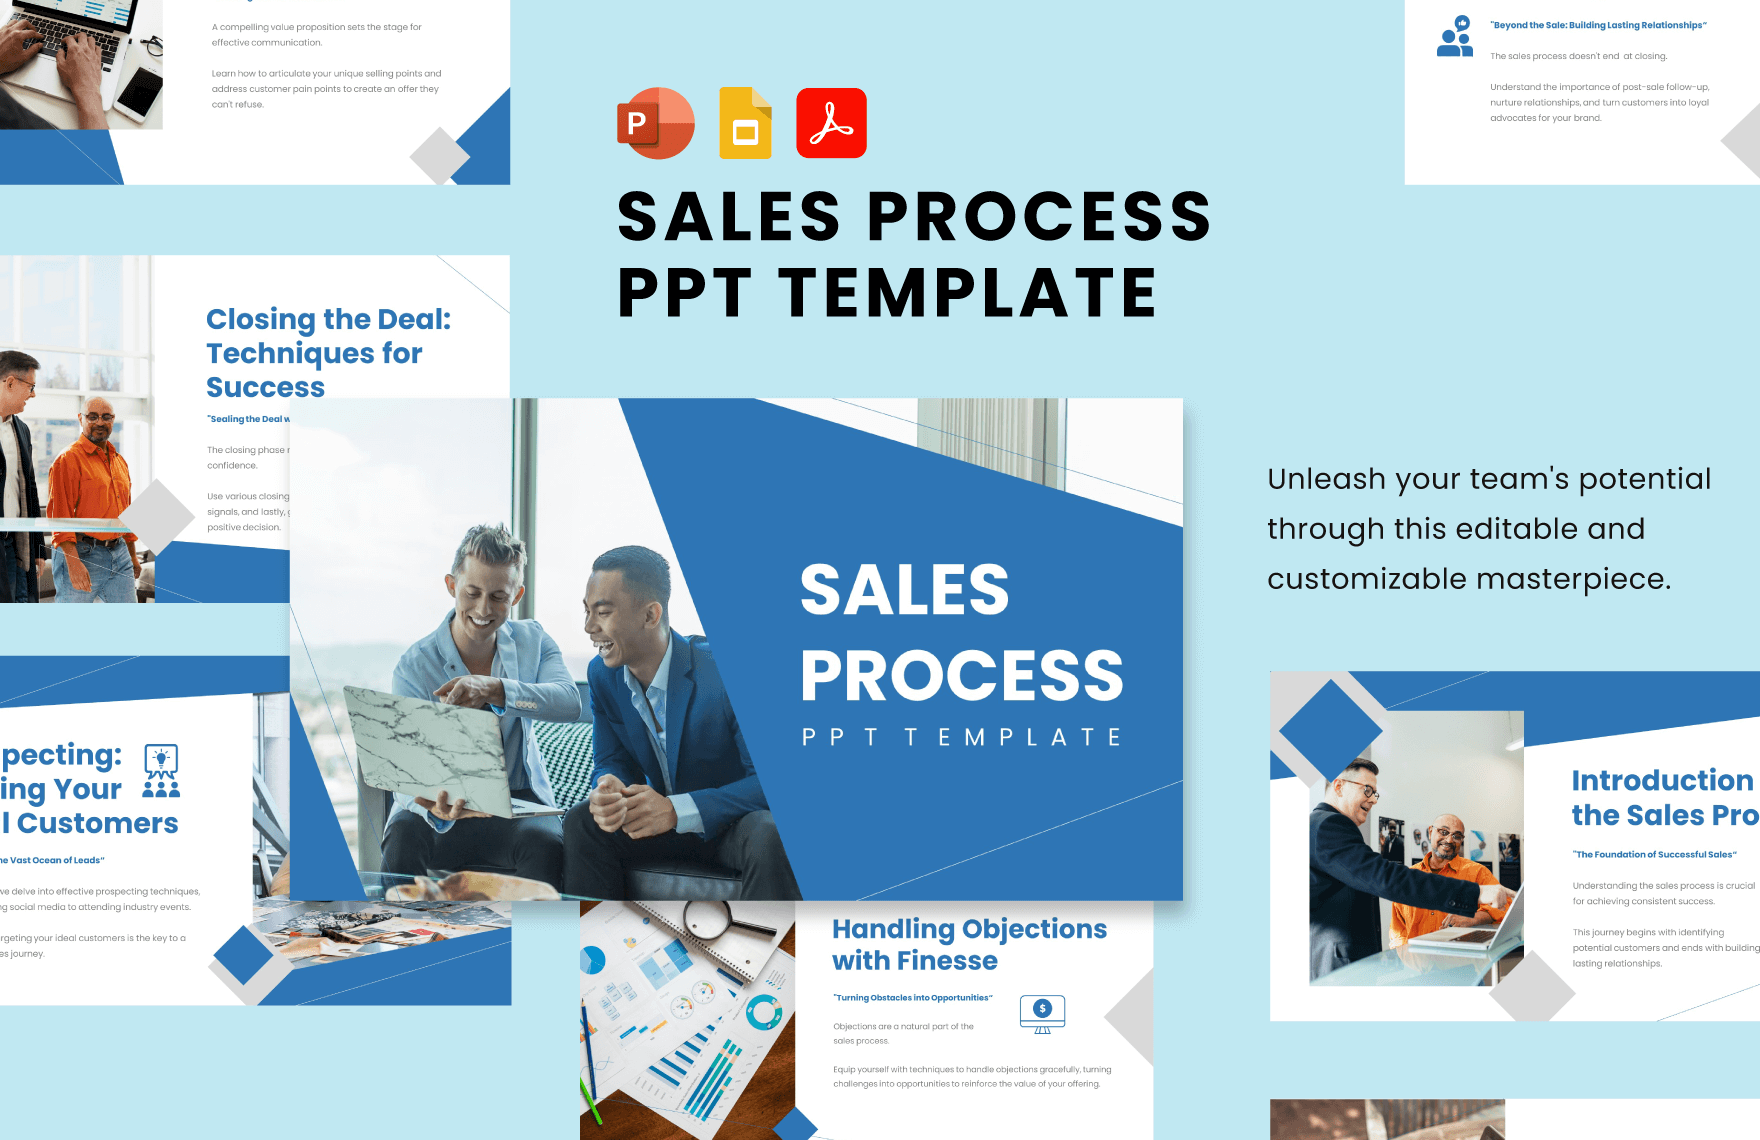 Sales Process PPT Template